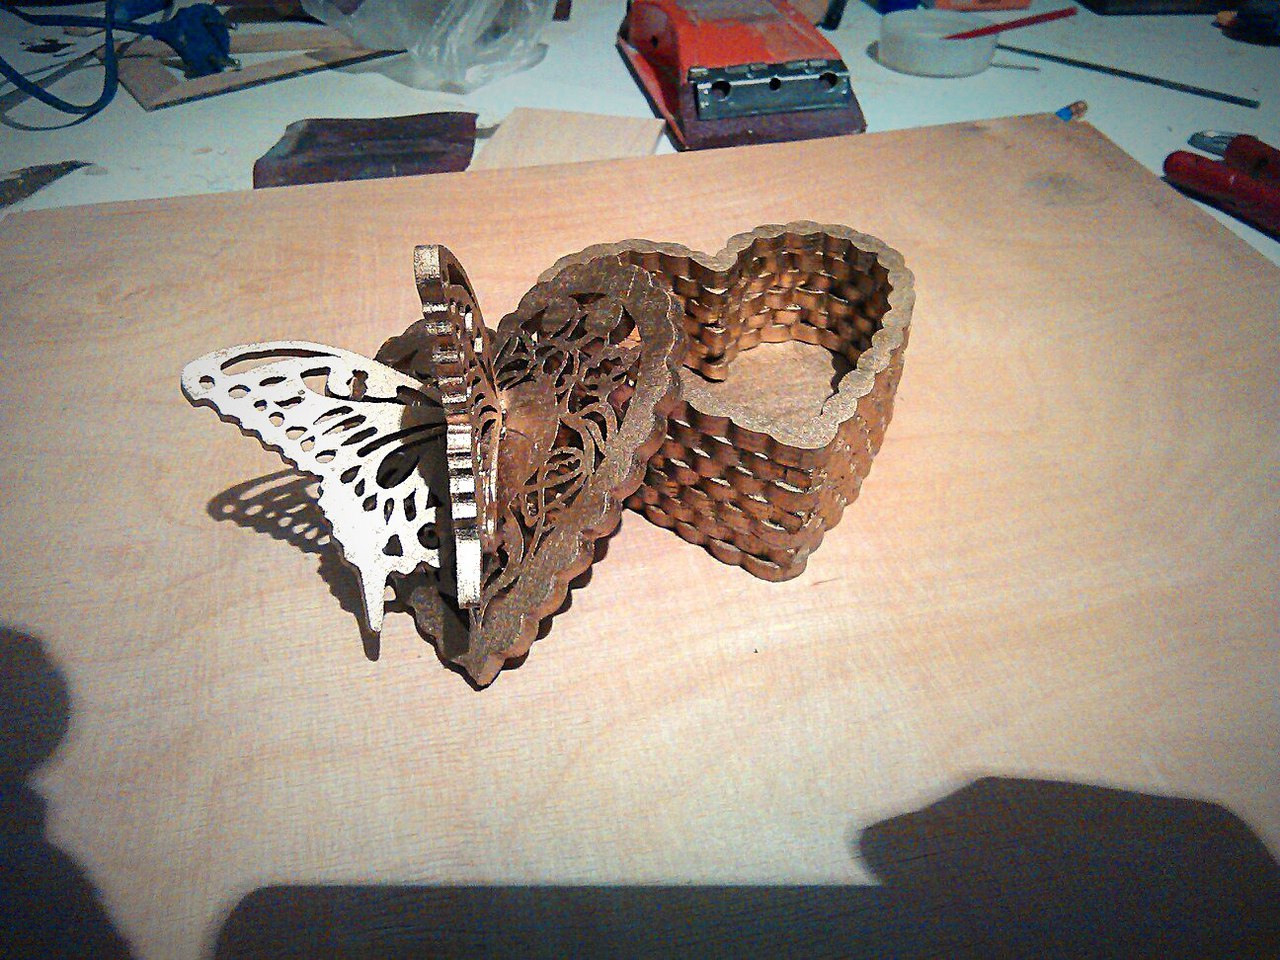 Butterfly Heart Box Free DXF File